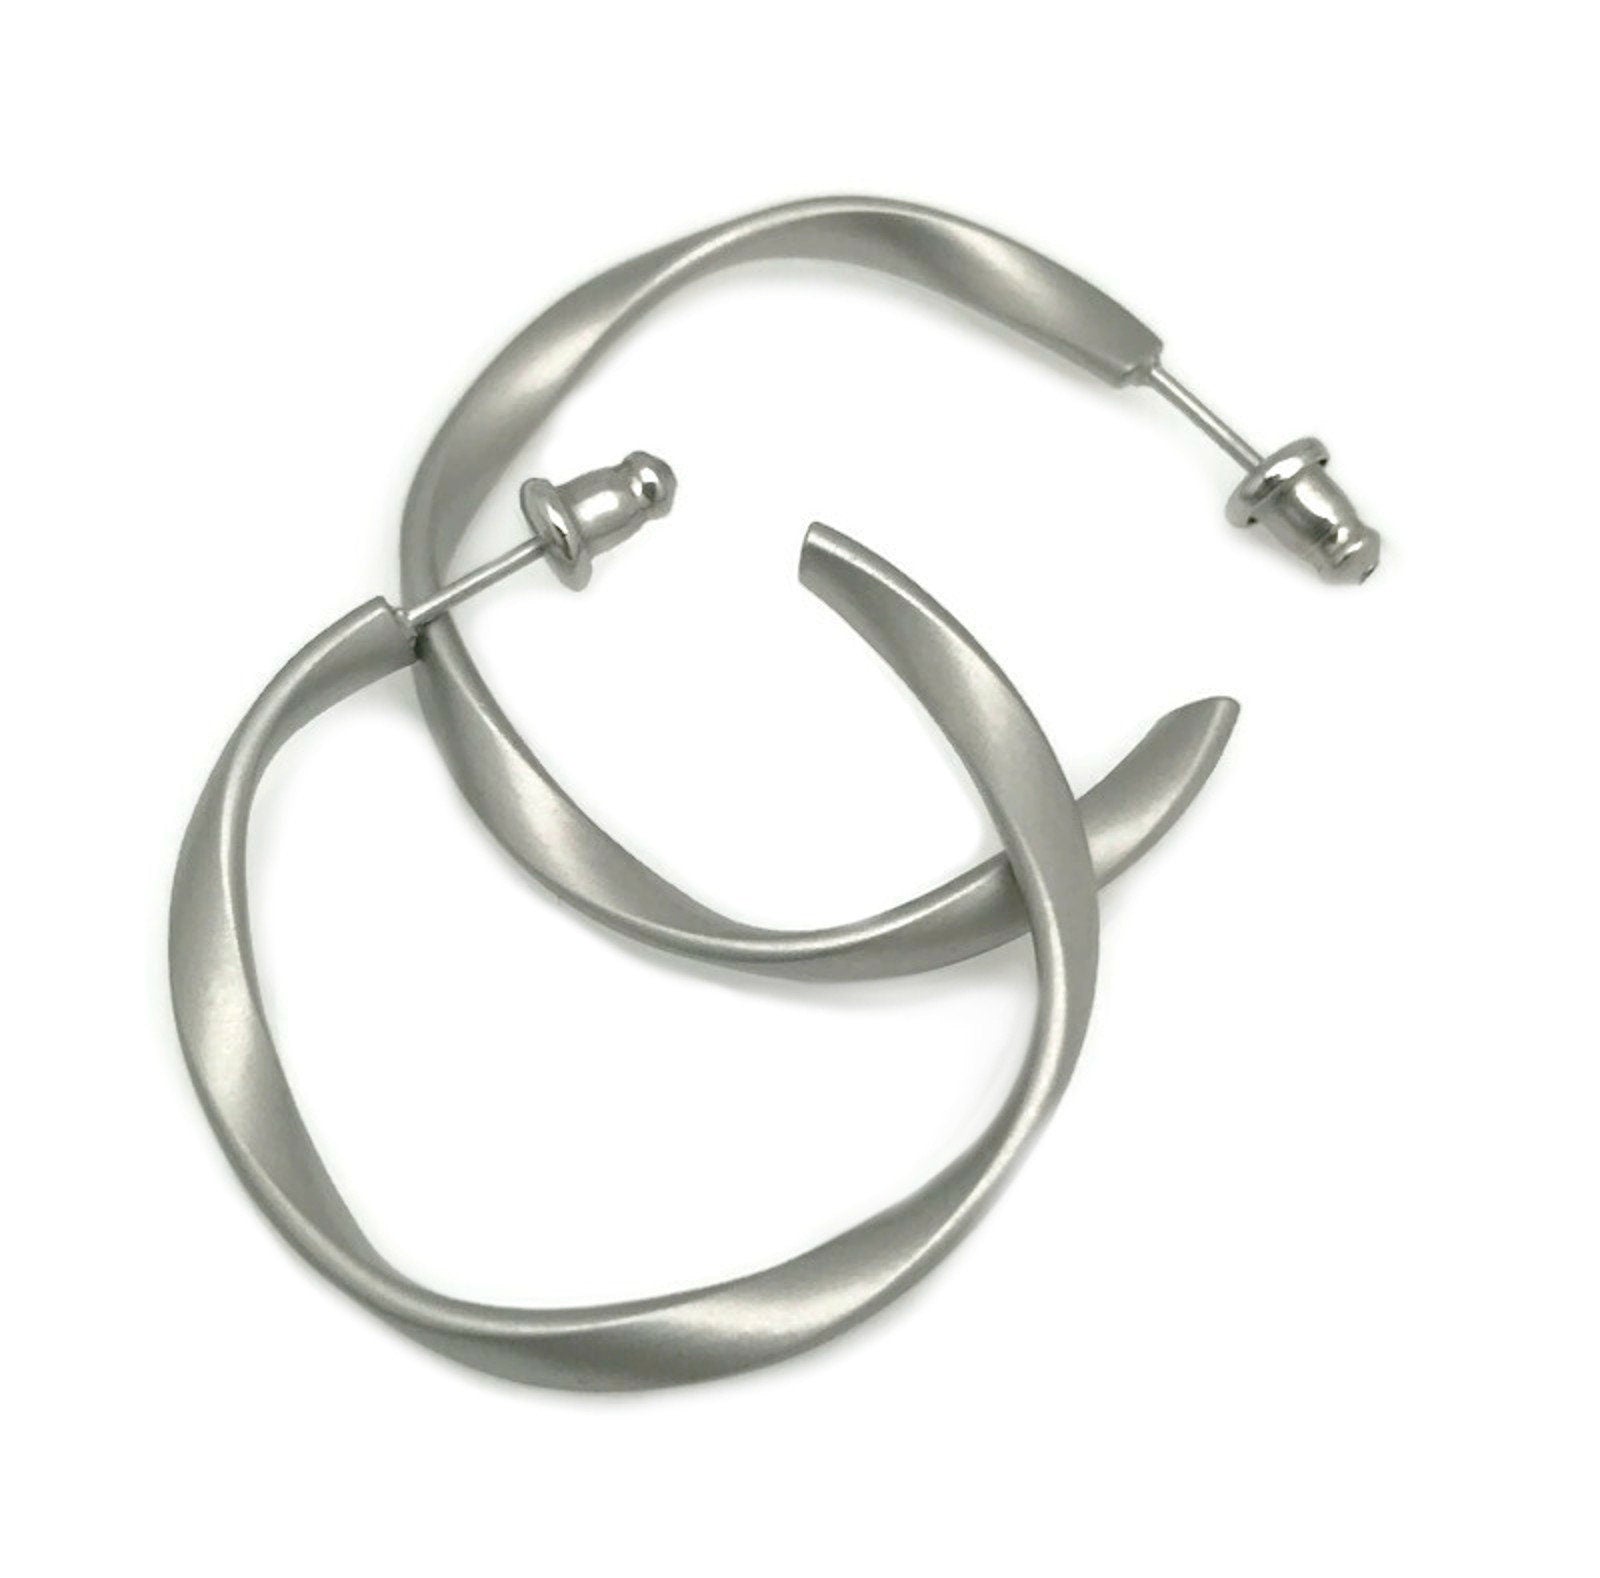 Twisted Metal Hoop Earrings, Stainless Steel Stud, Satin Finish, Medium Size, Mobius Design, Twist Earrings, Gift for Her